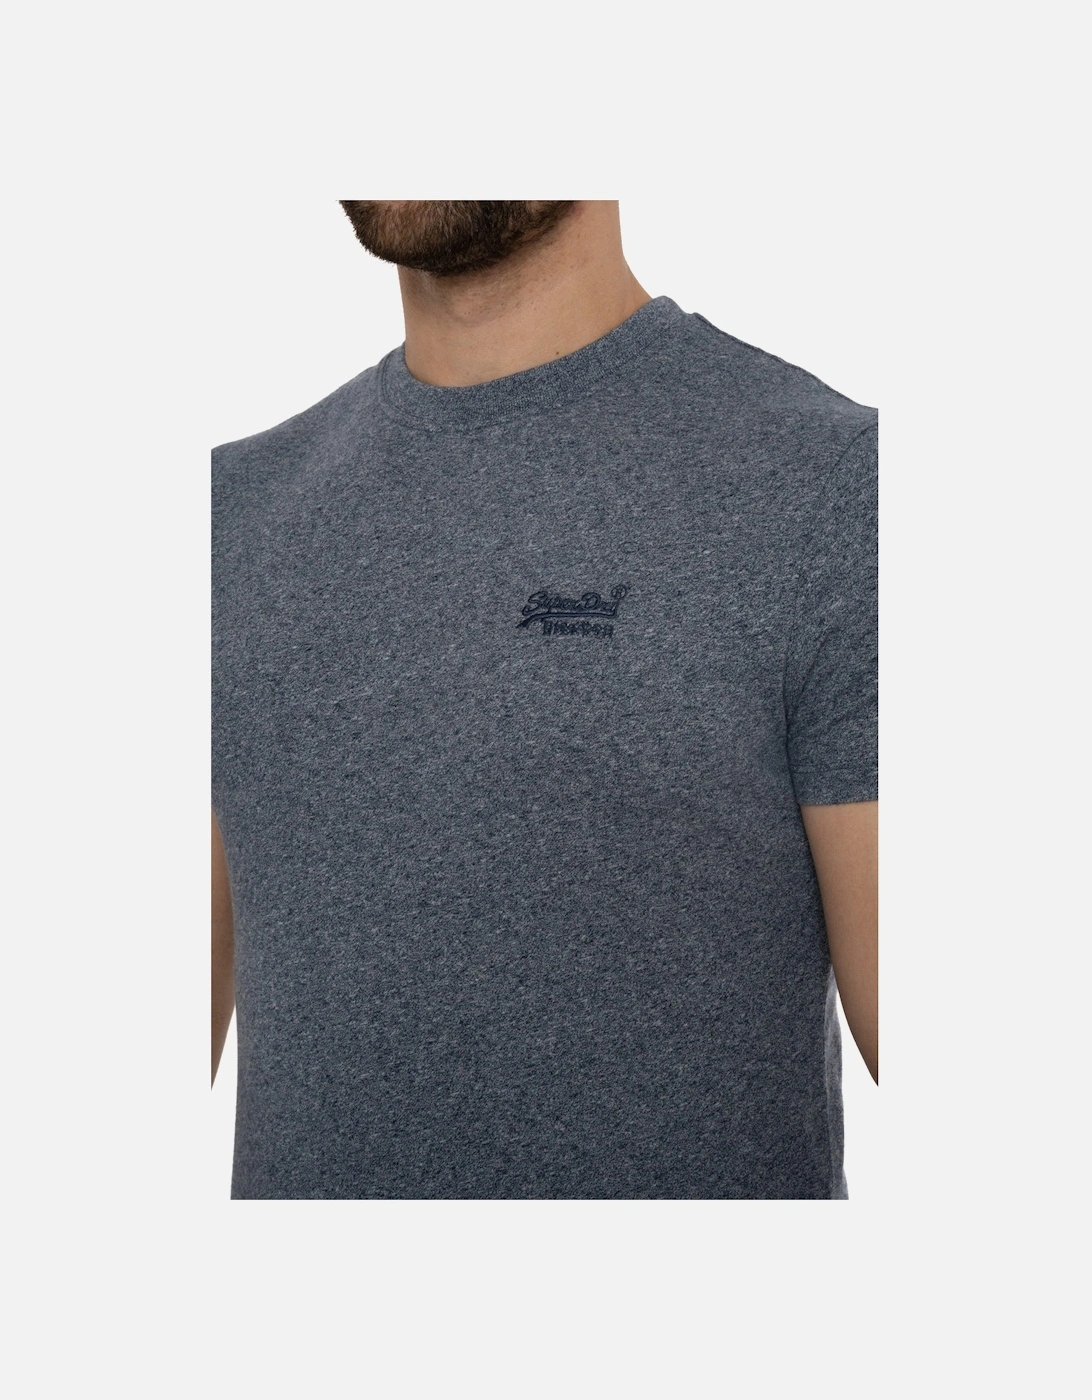 Mens Vintage Embroidered Logo T-Shirt (Navy)